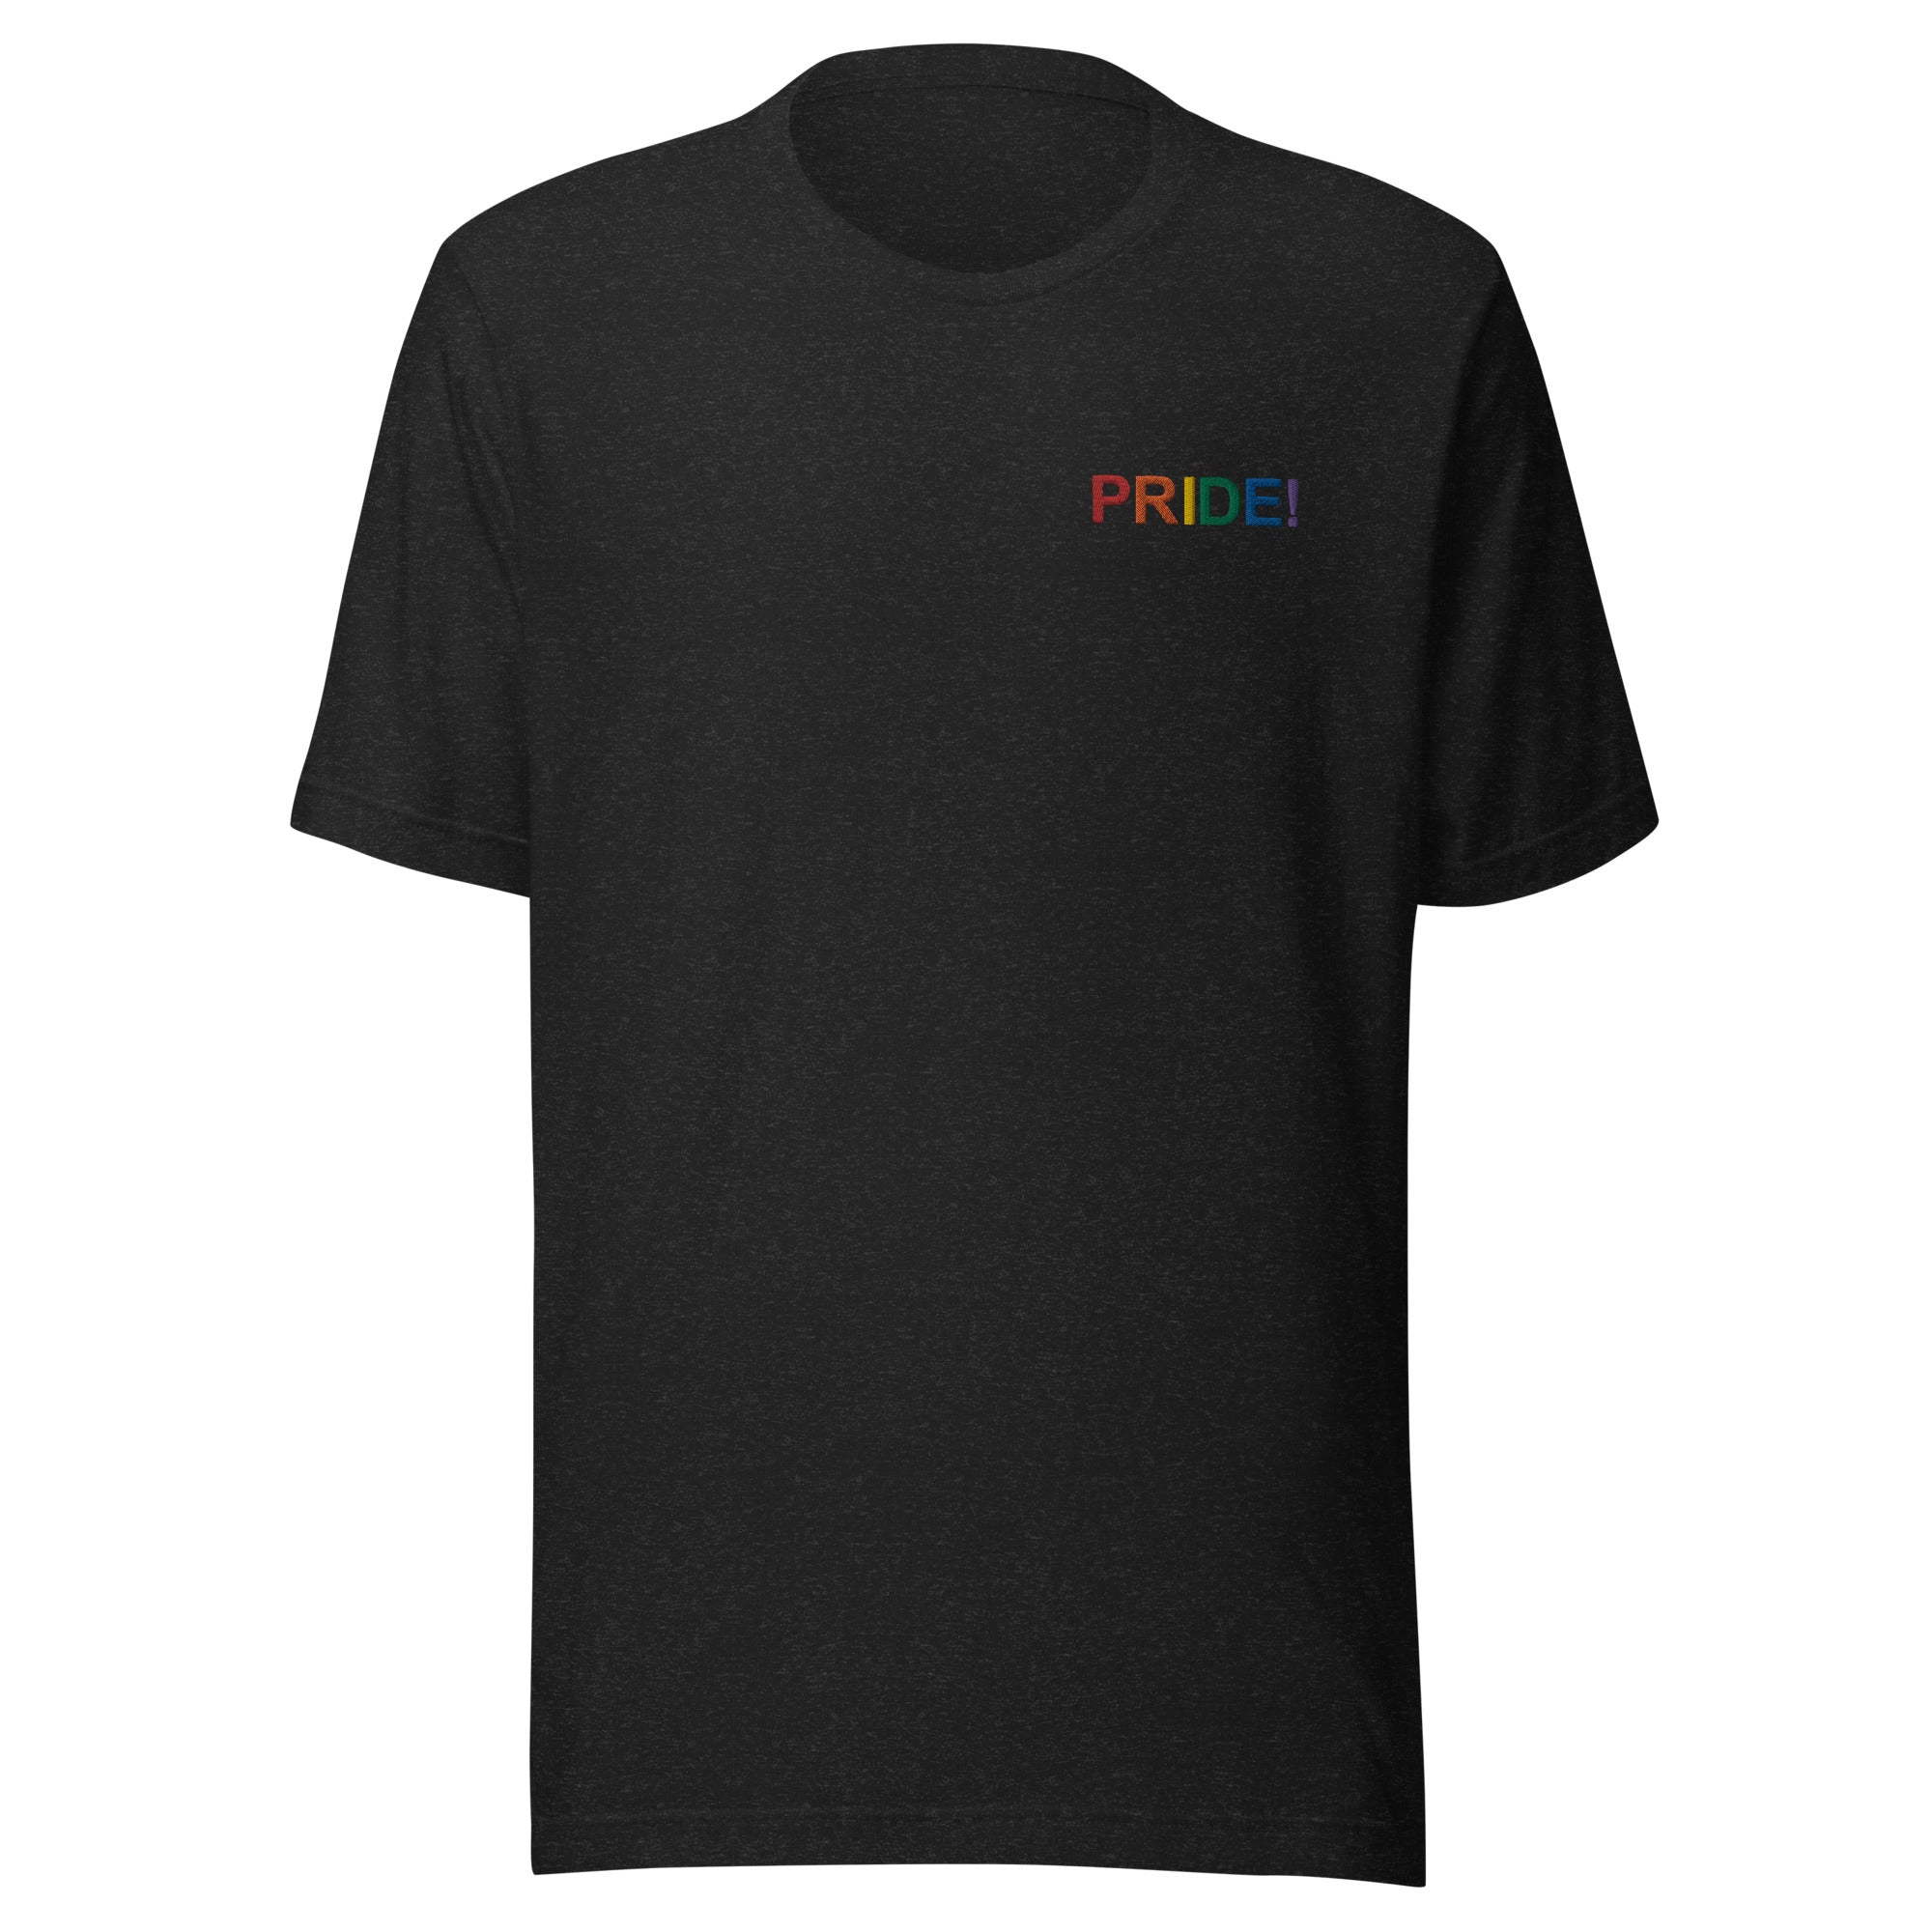 Pride / Pride 2023 / Embroidery / T-Shirt